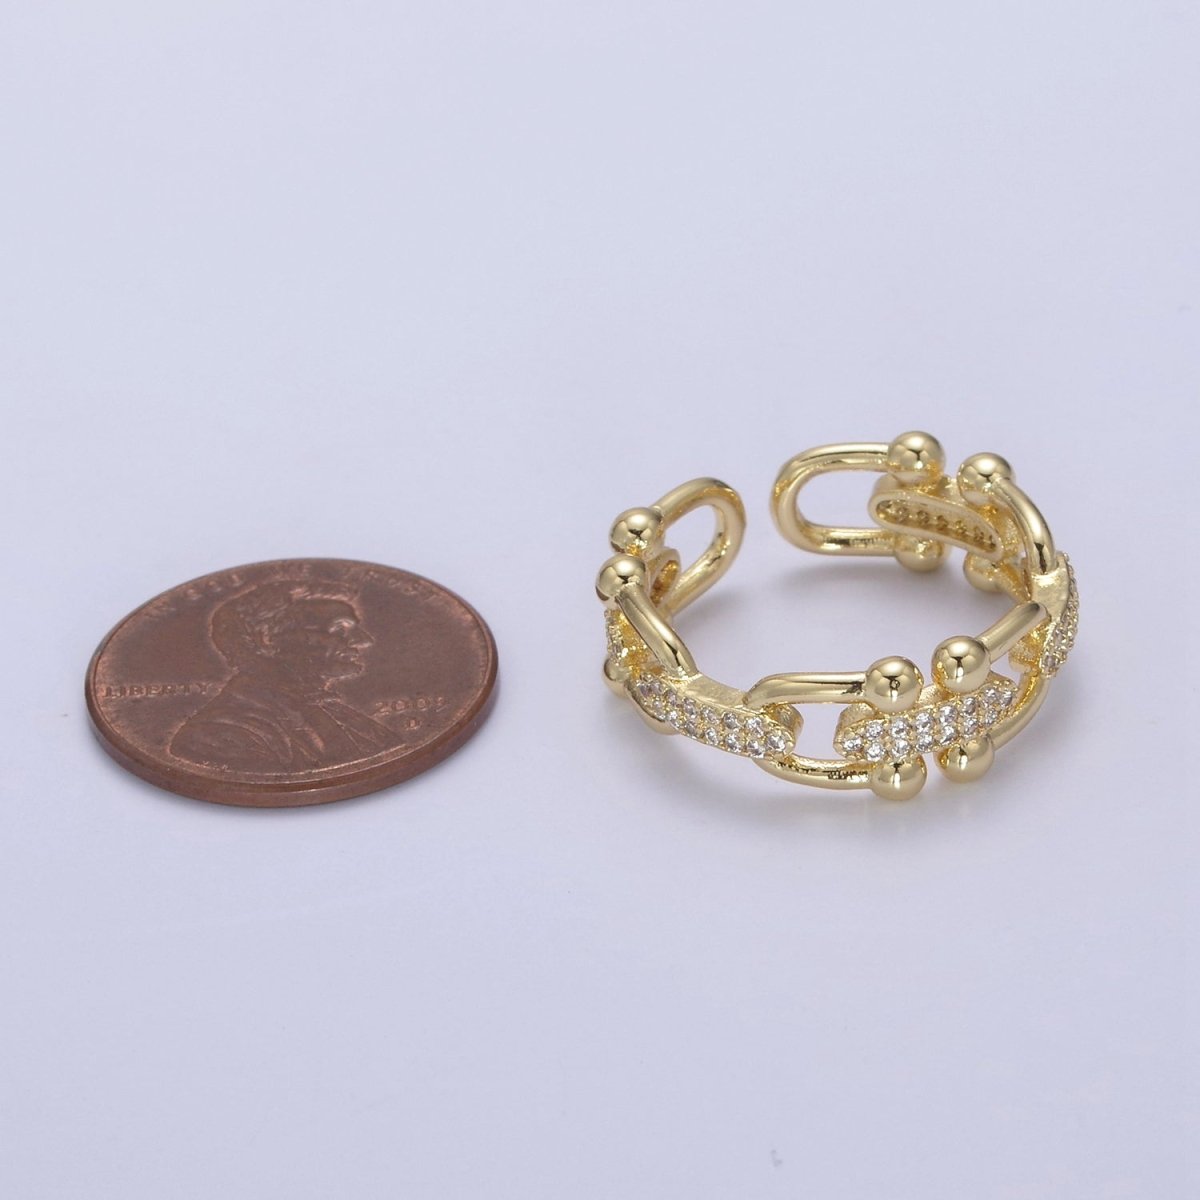 Gold Filled CZ Statement Jewelry Open Adjustable Ring U-321 U-322 - DLUXCA